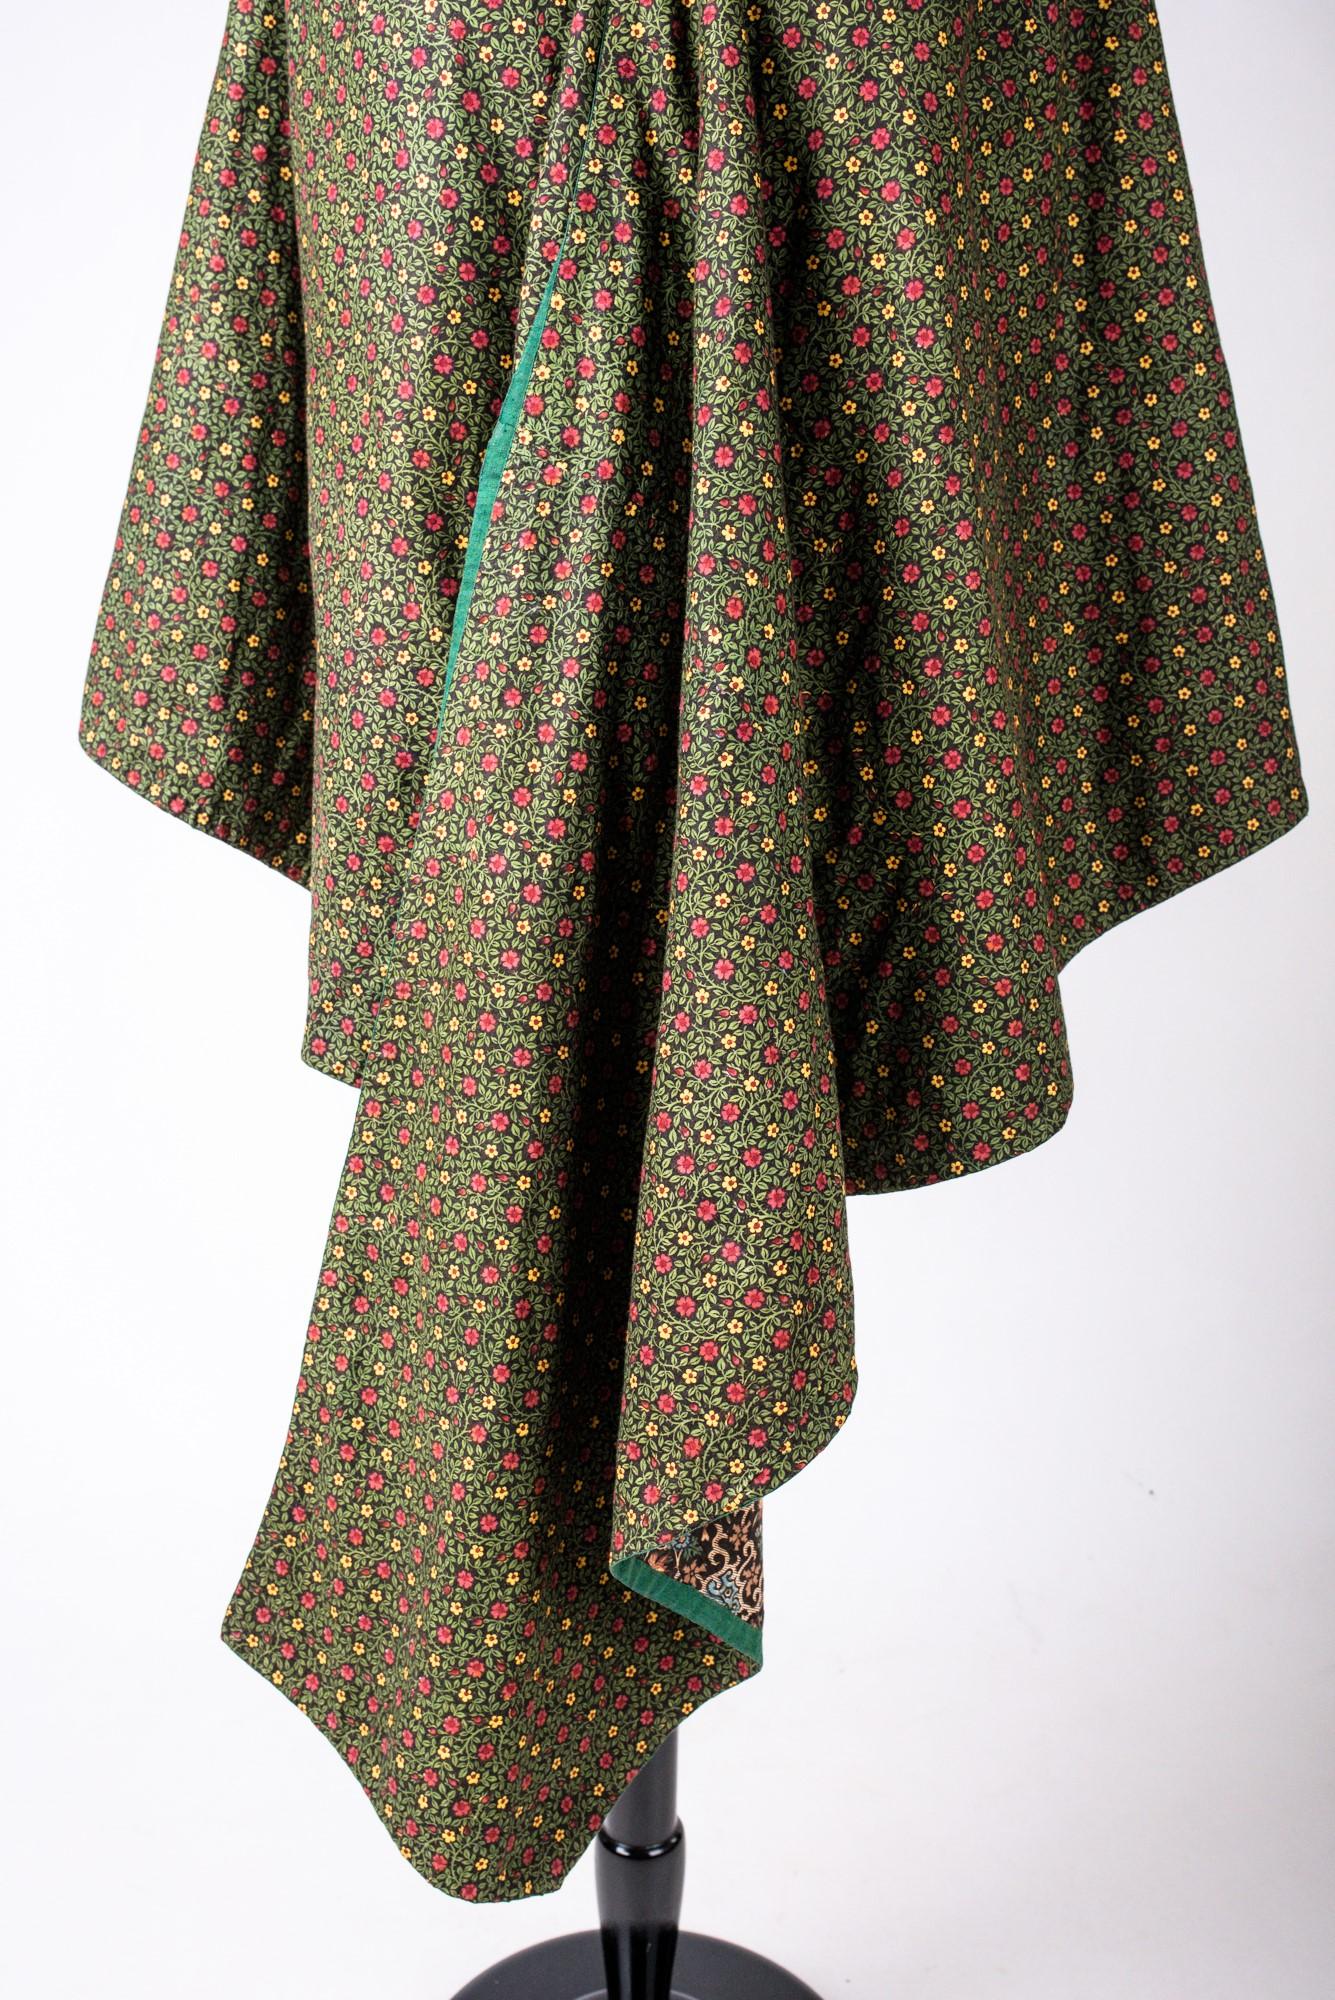 A Printed cotton Cloak- Provence Circa 1800 8